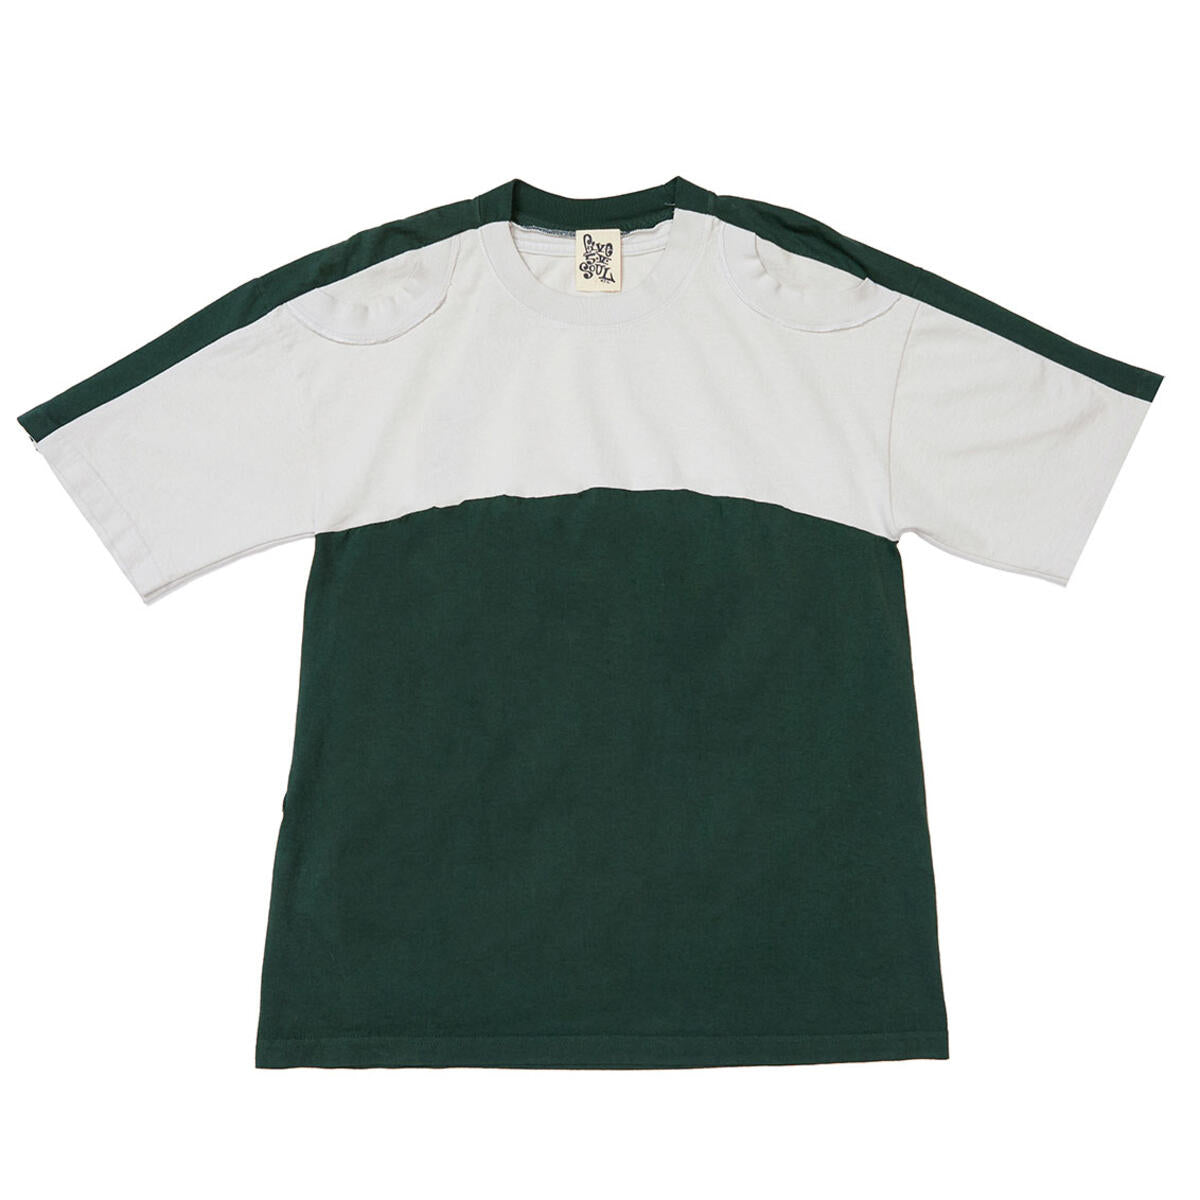 Triple 5 Soul Fort Green Shirt